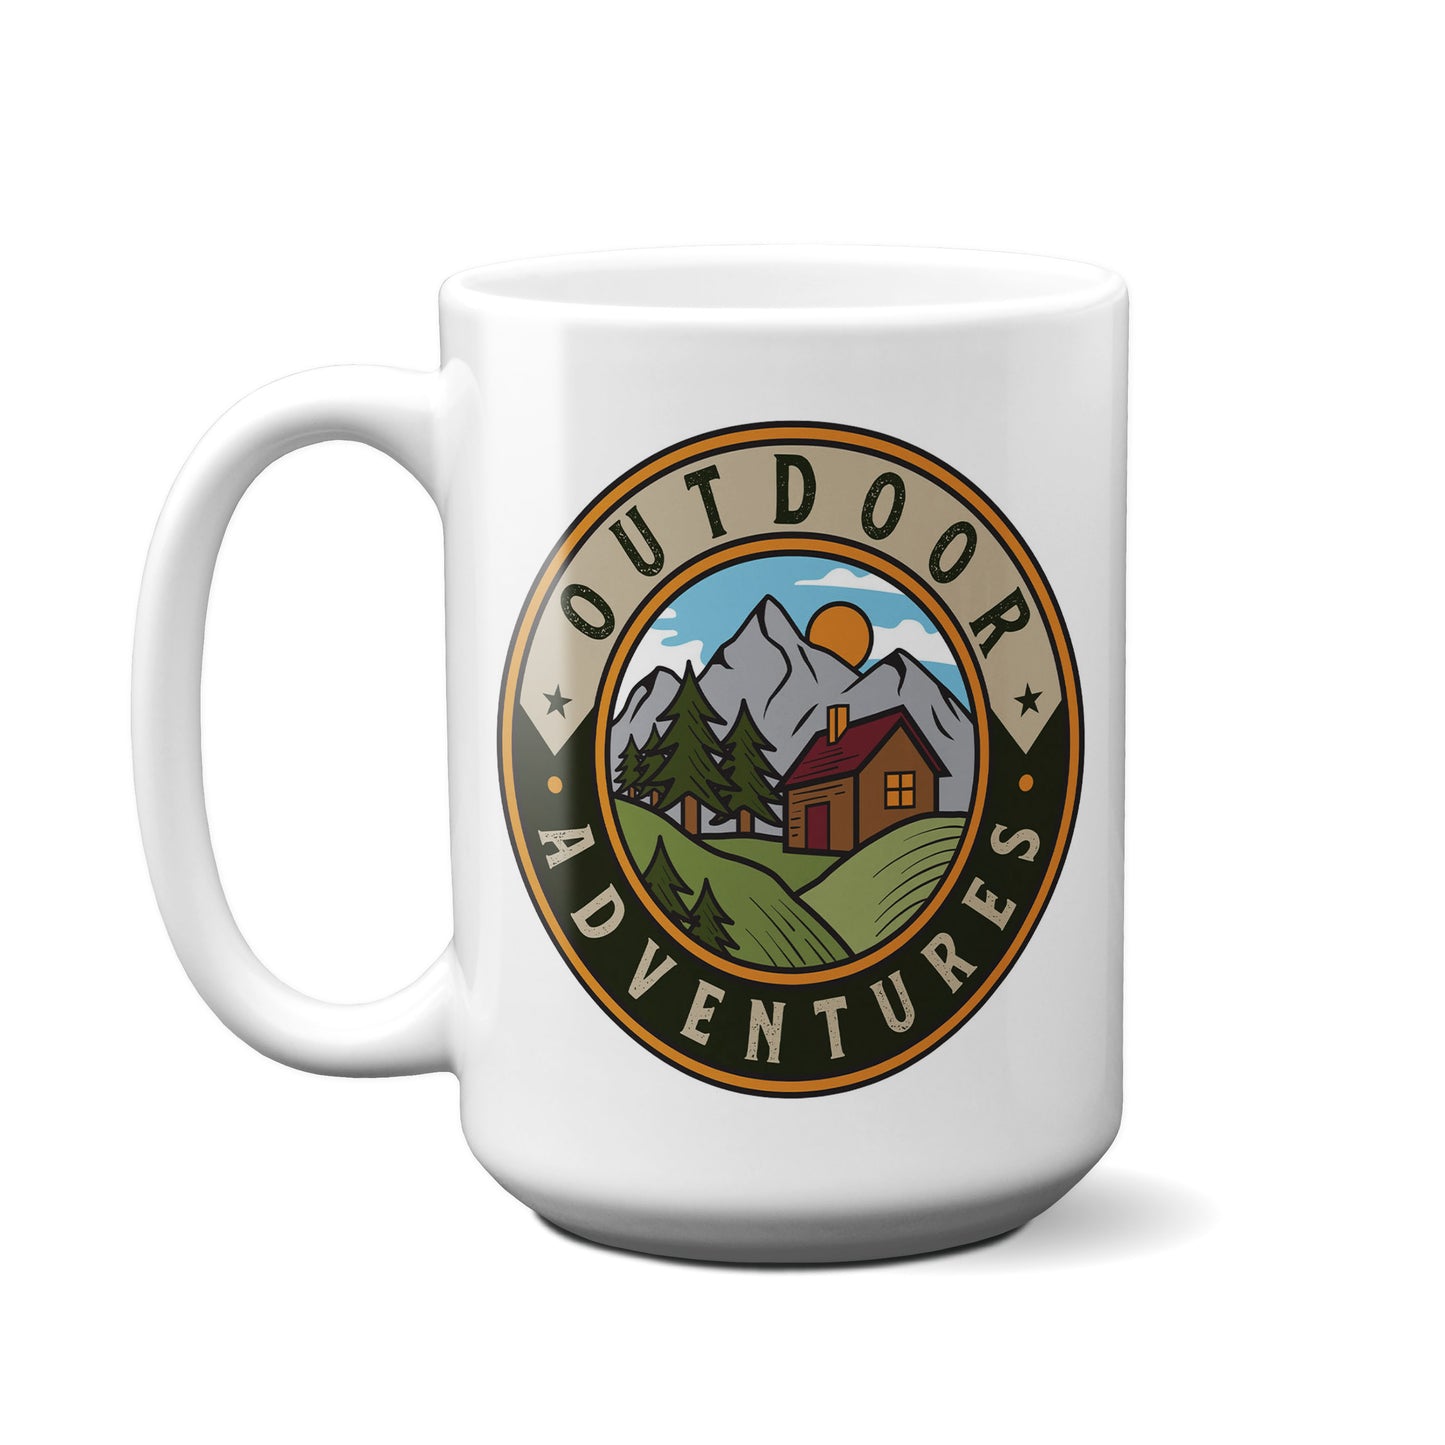 Outdoor Adventures Badge Mug